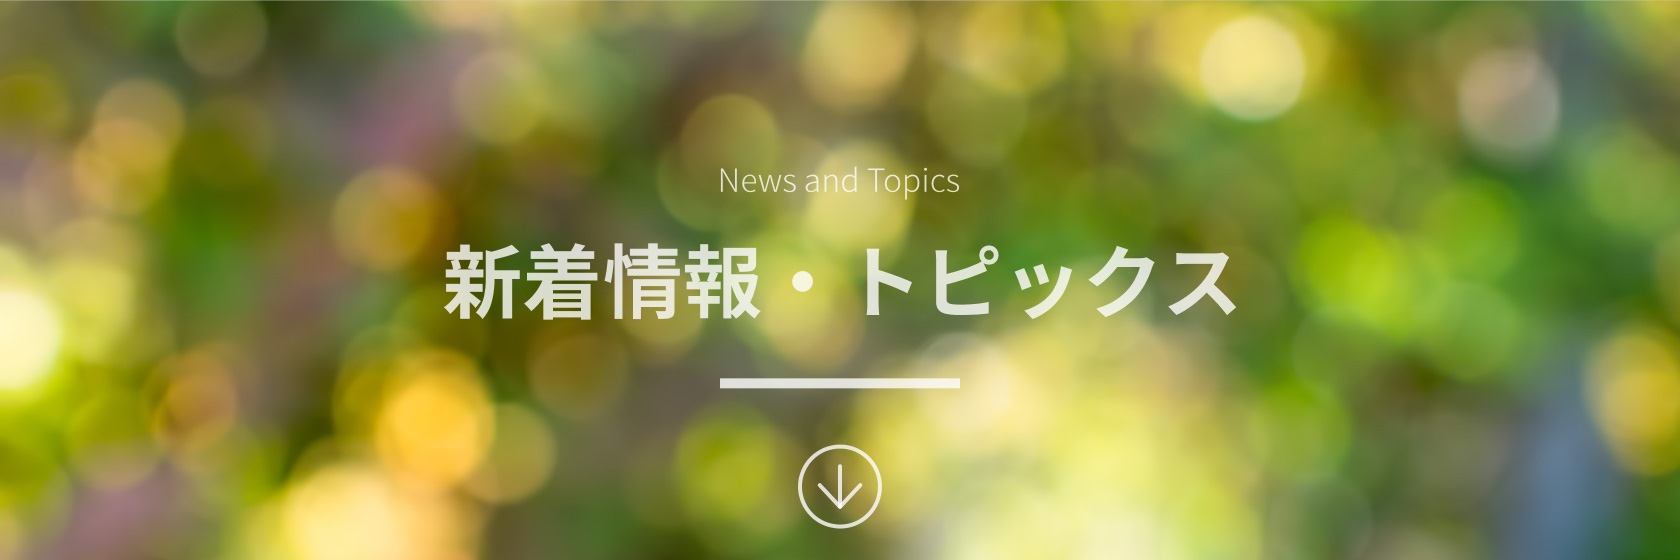 News and Topics
新着情報・トピックス